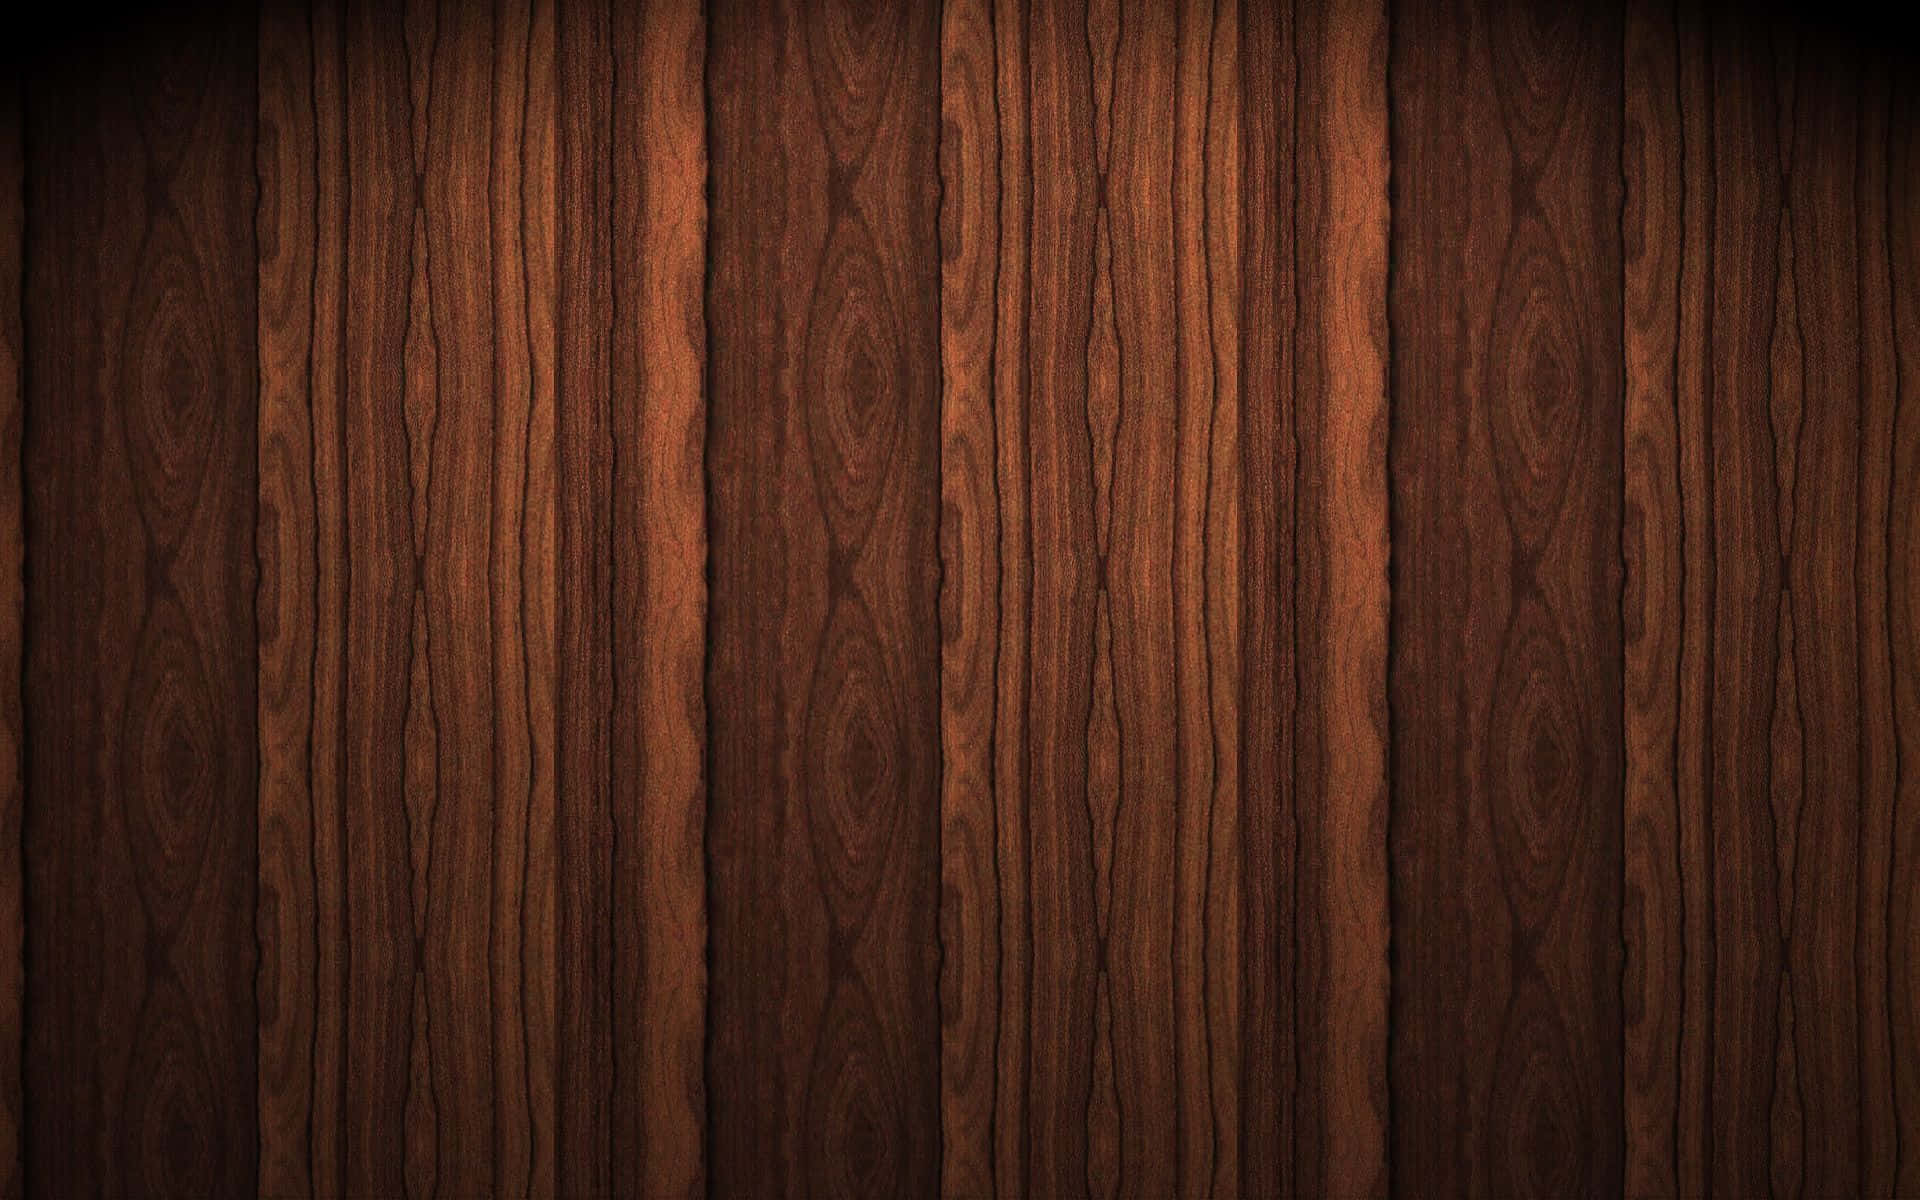 Rustic Wood Grain Background